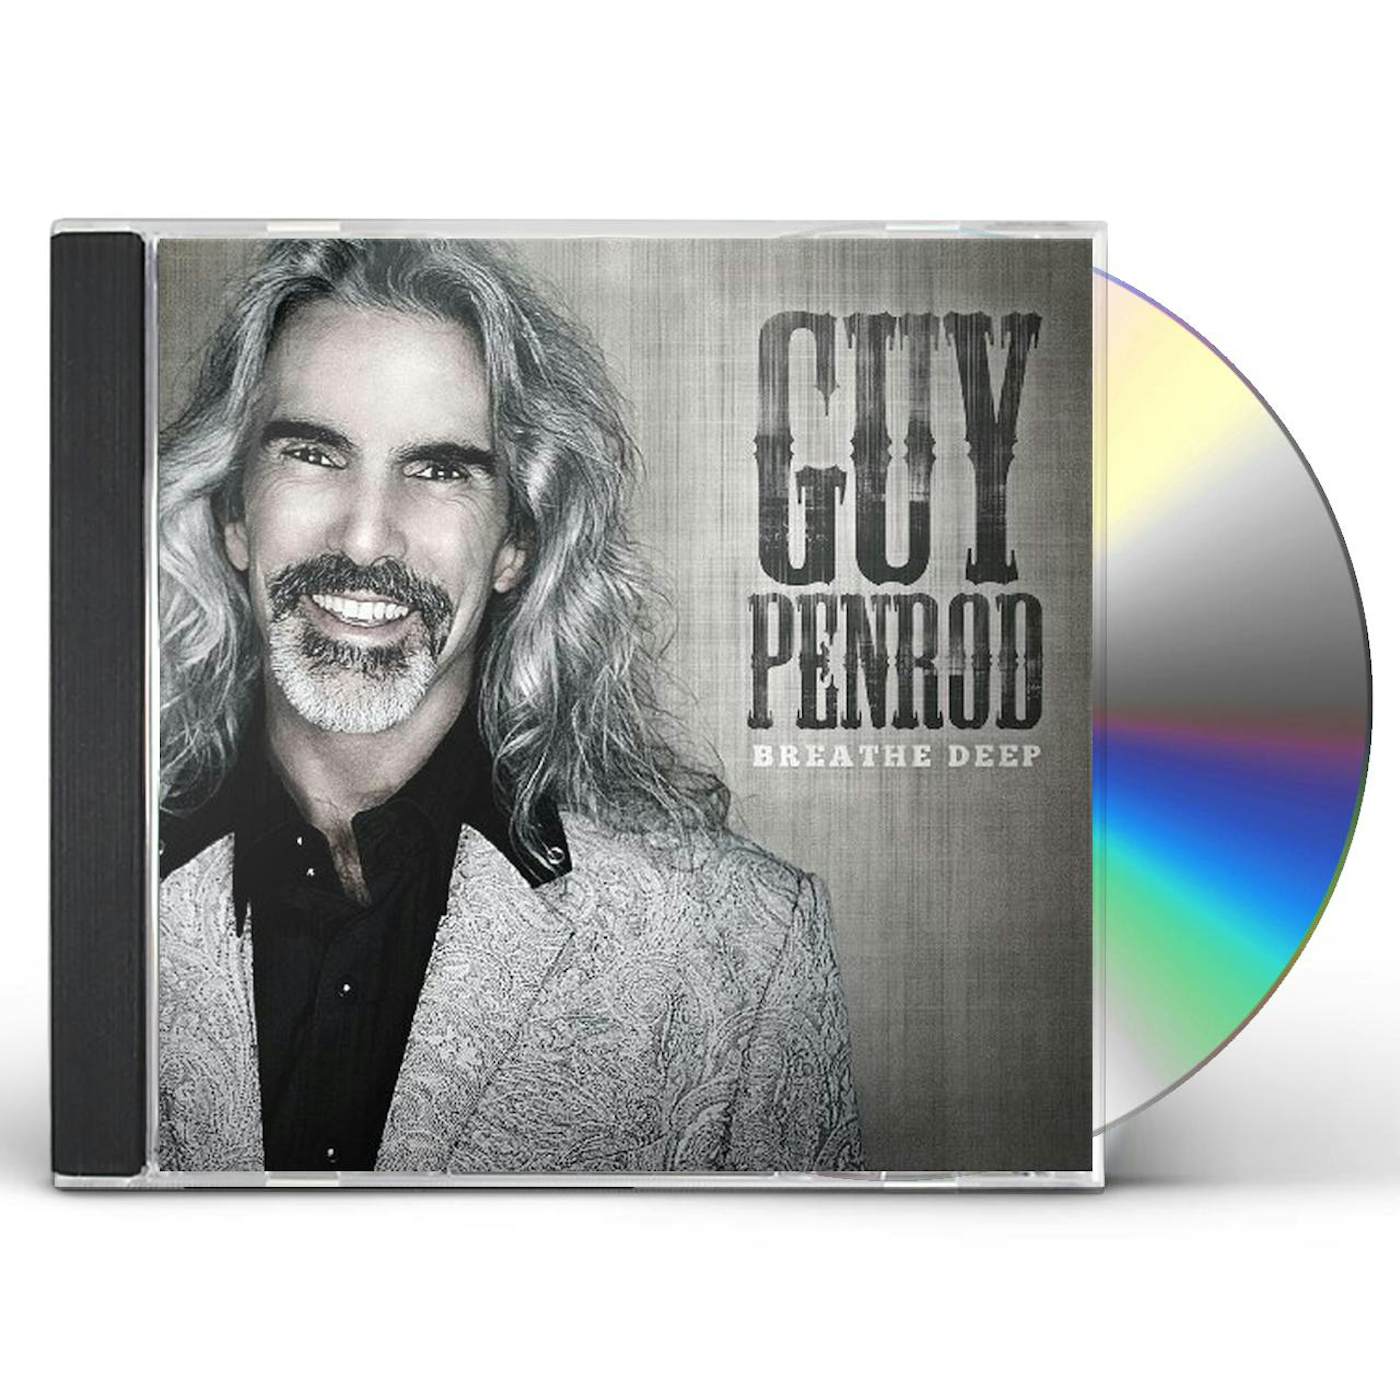 Guy Penrod BREATHE DEEP CD